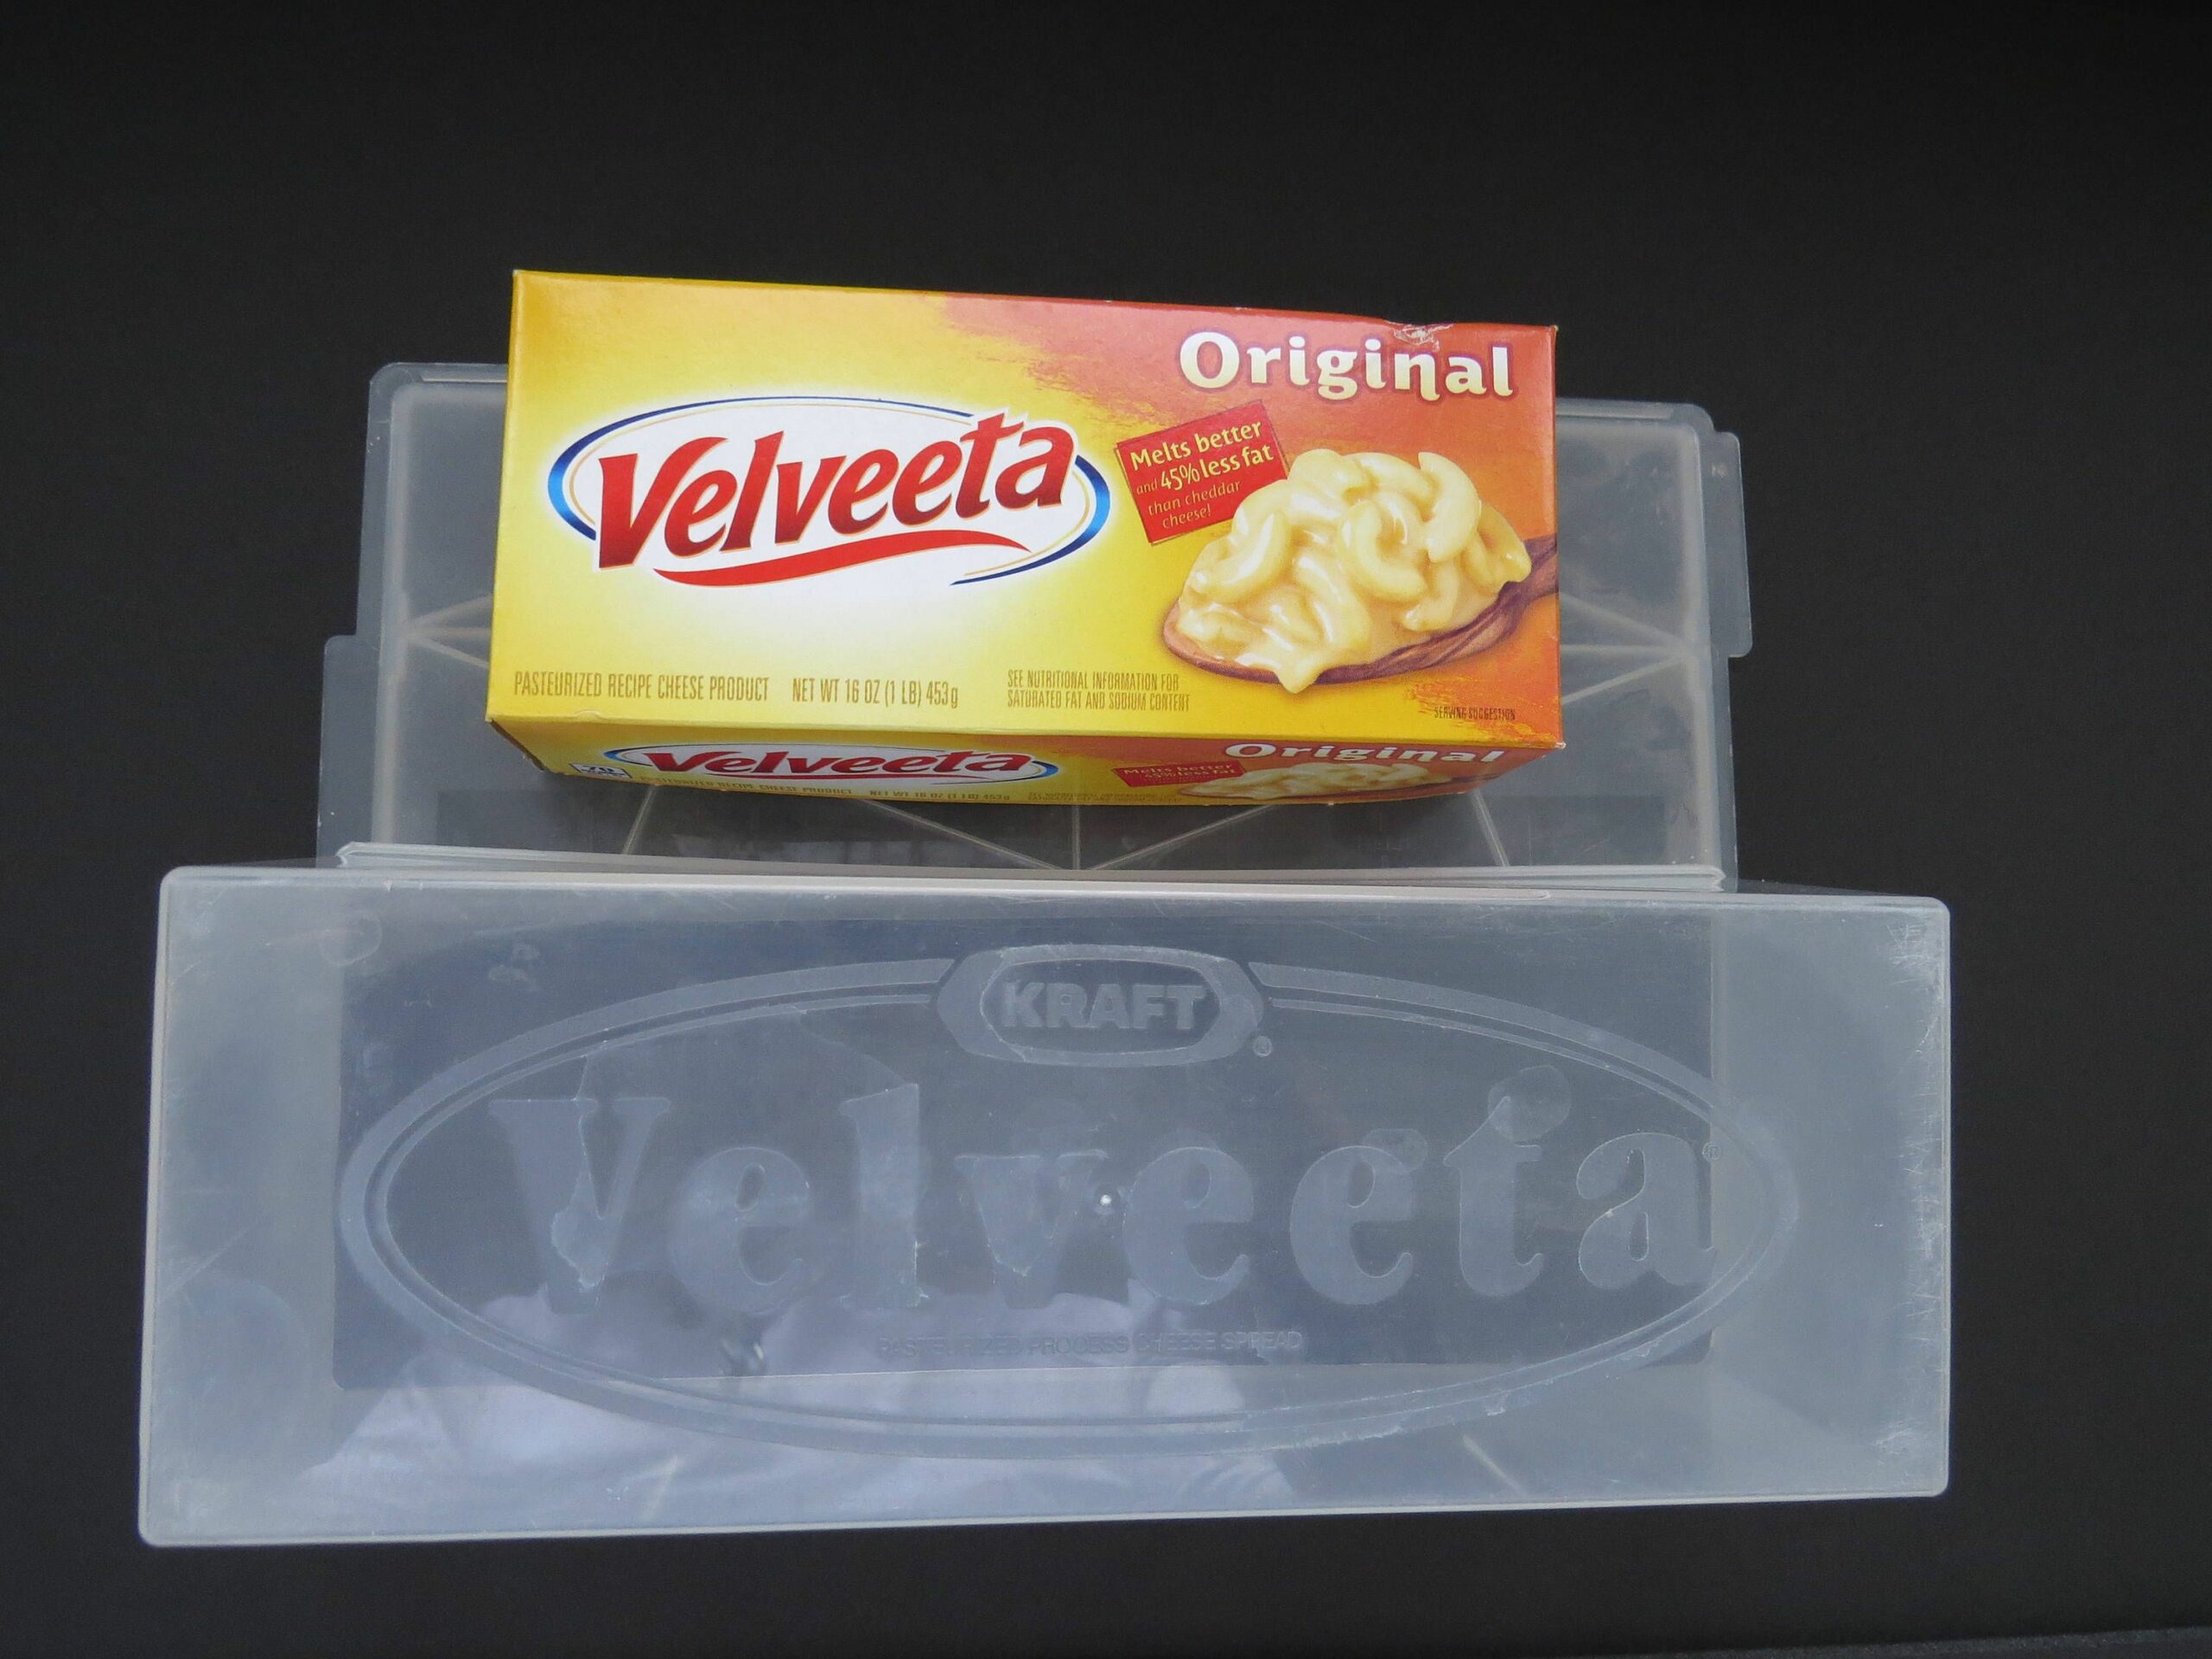 Storage Tips And Techniques For Velveeta Cheese -  How to store Velveeta cheese?